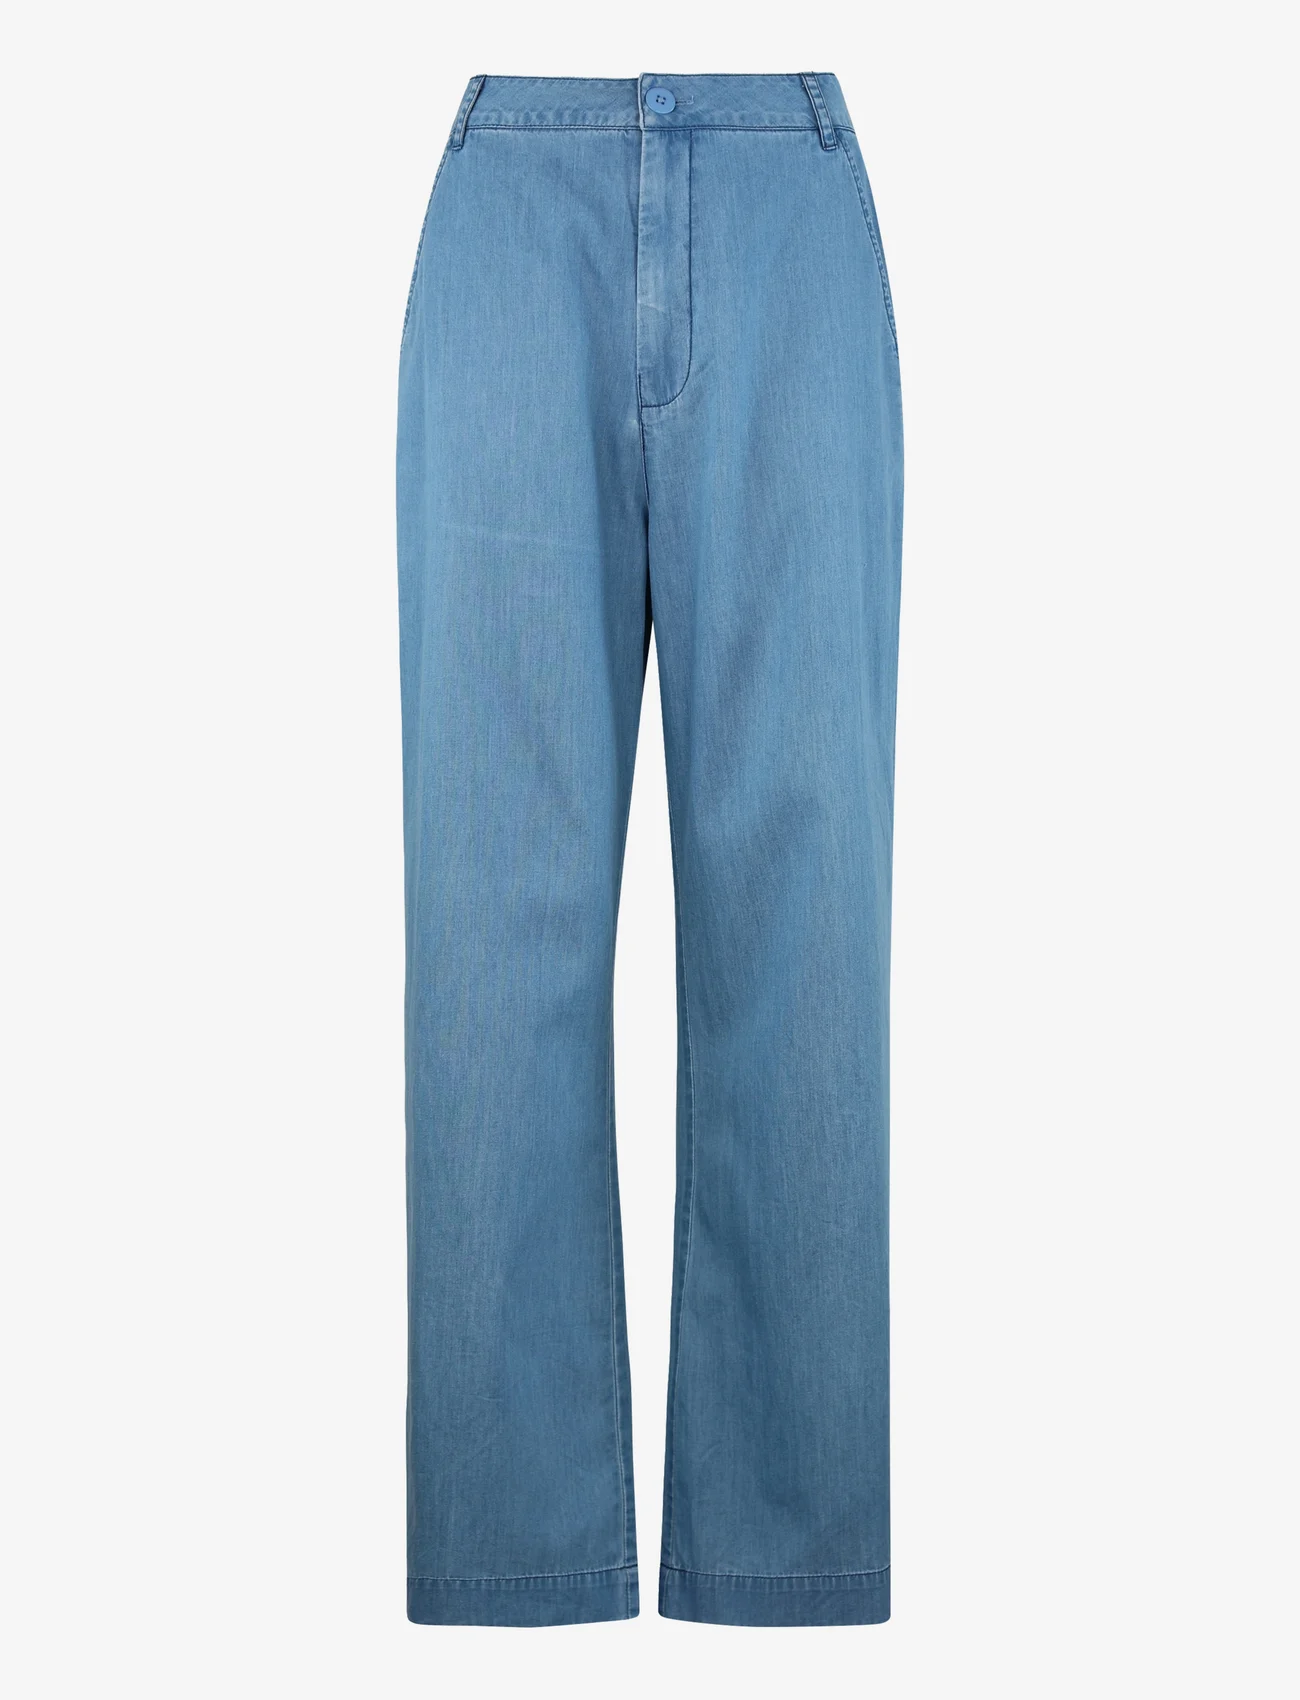 Six Ames - LITH - vida jeans - denim blue - 0